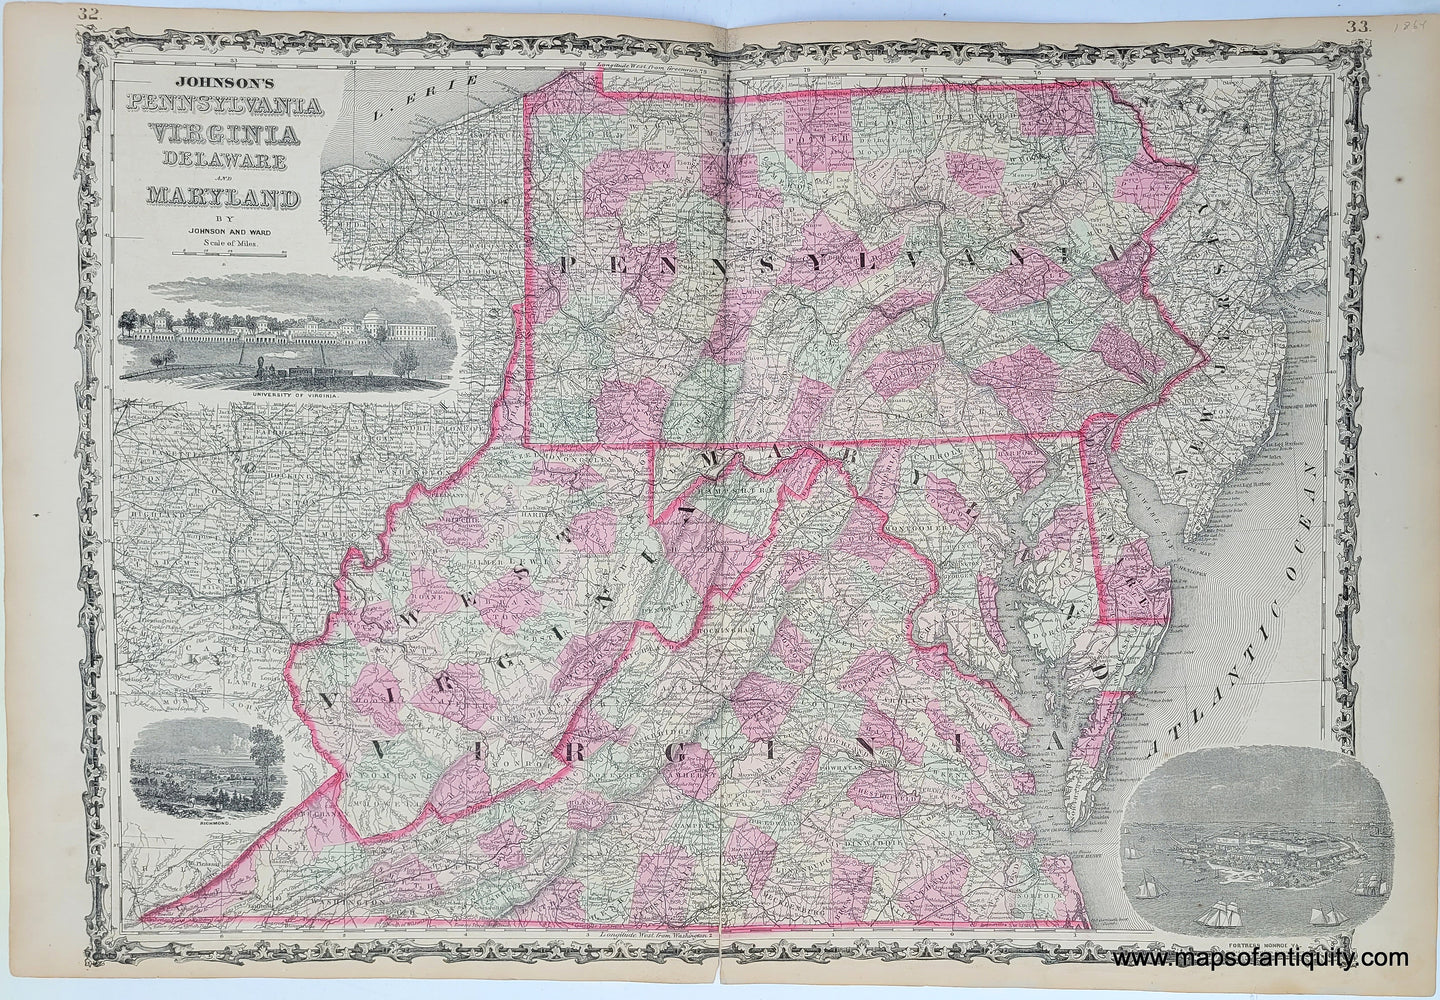 Maps-Antiquity-Antique-Map-United-States-Johnson-Ward-1864-1860s-1800s-19th-Century-Johnson's-Pennsylvania-Virginia-Delaware-Maryland-Richmond-Fortress-Monroe-VA-University-of-Virginia